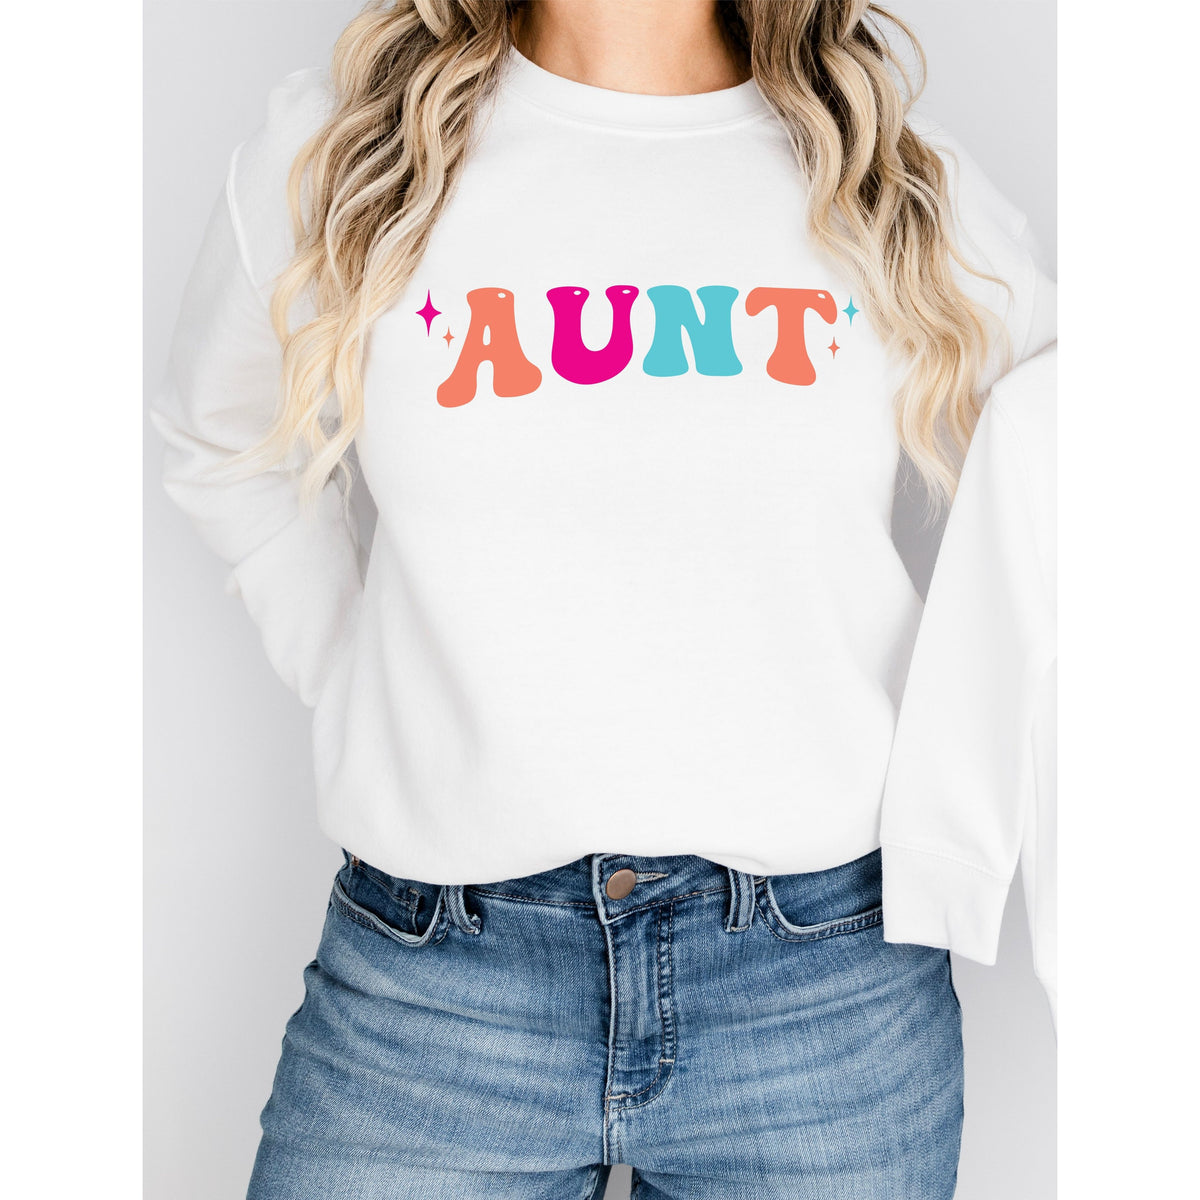 Aunt sweatshirt or tee